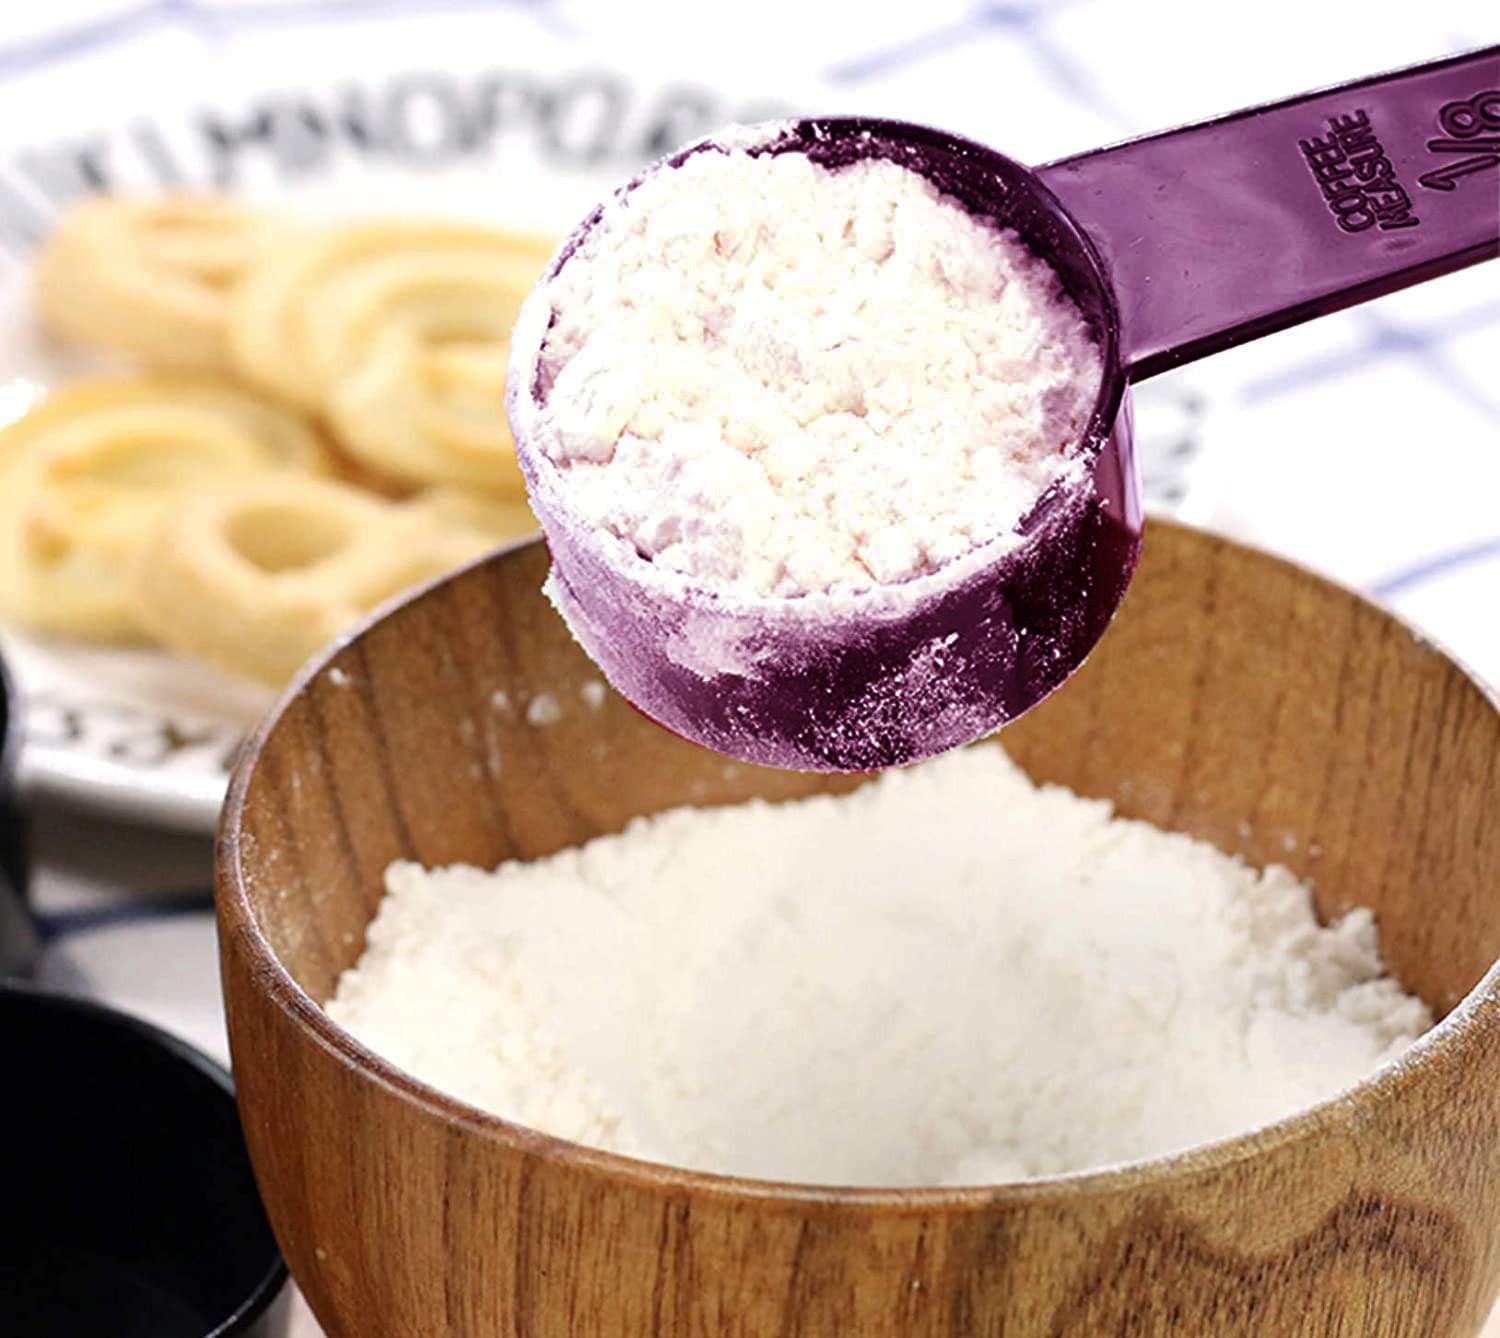 Kuber Industries Food Grade BPA Free 8 pcs Measuring Cup And Spoon Set (Purple)